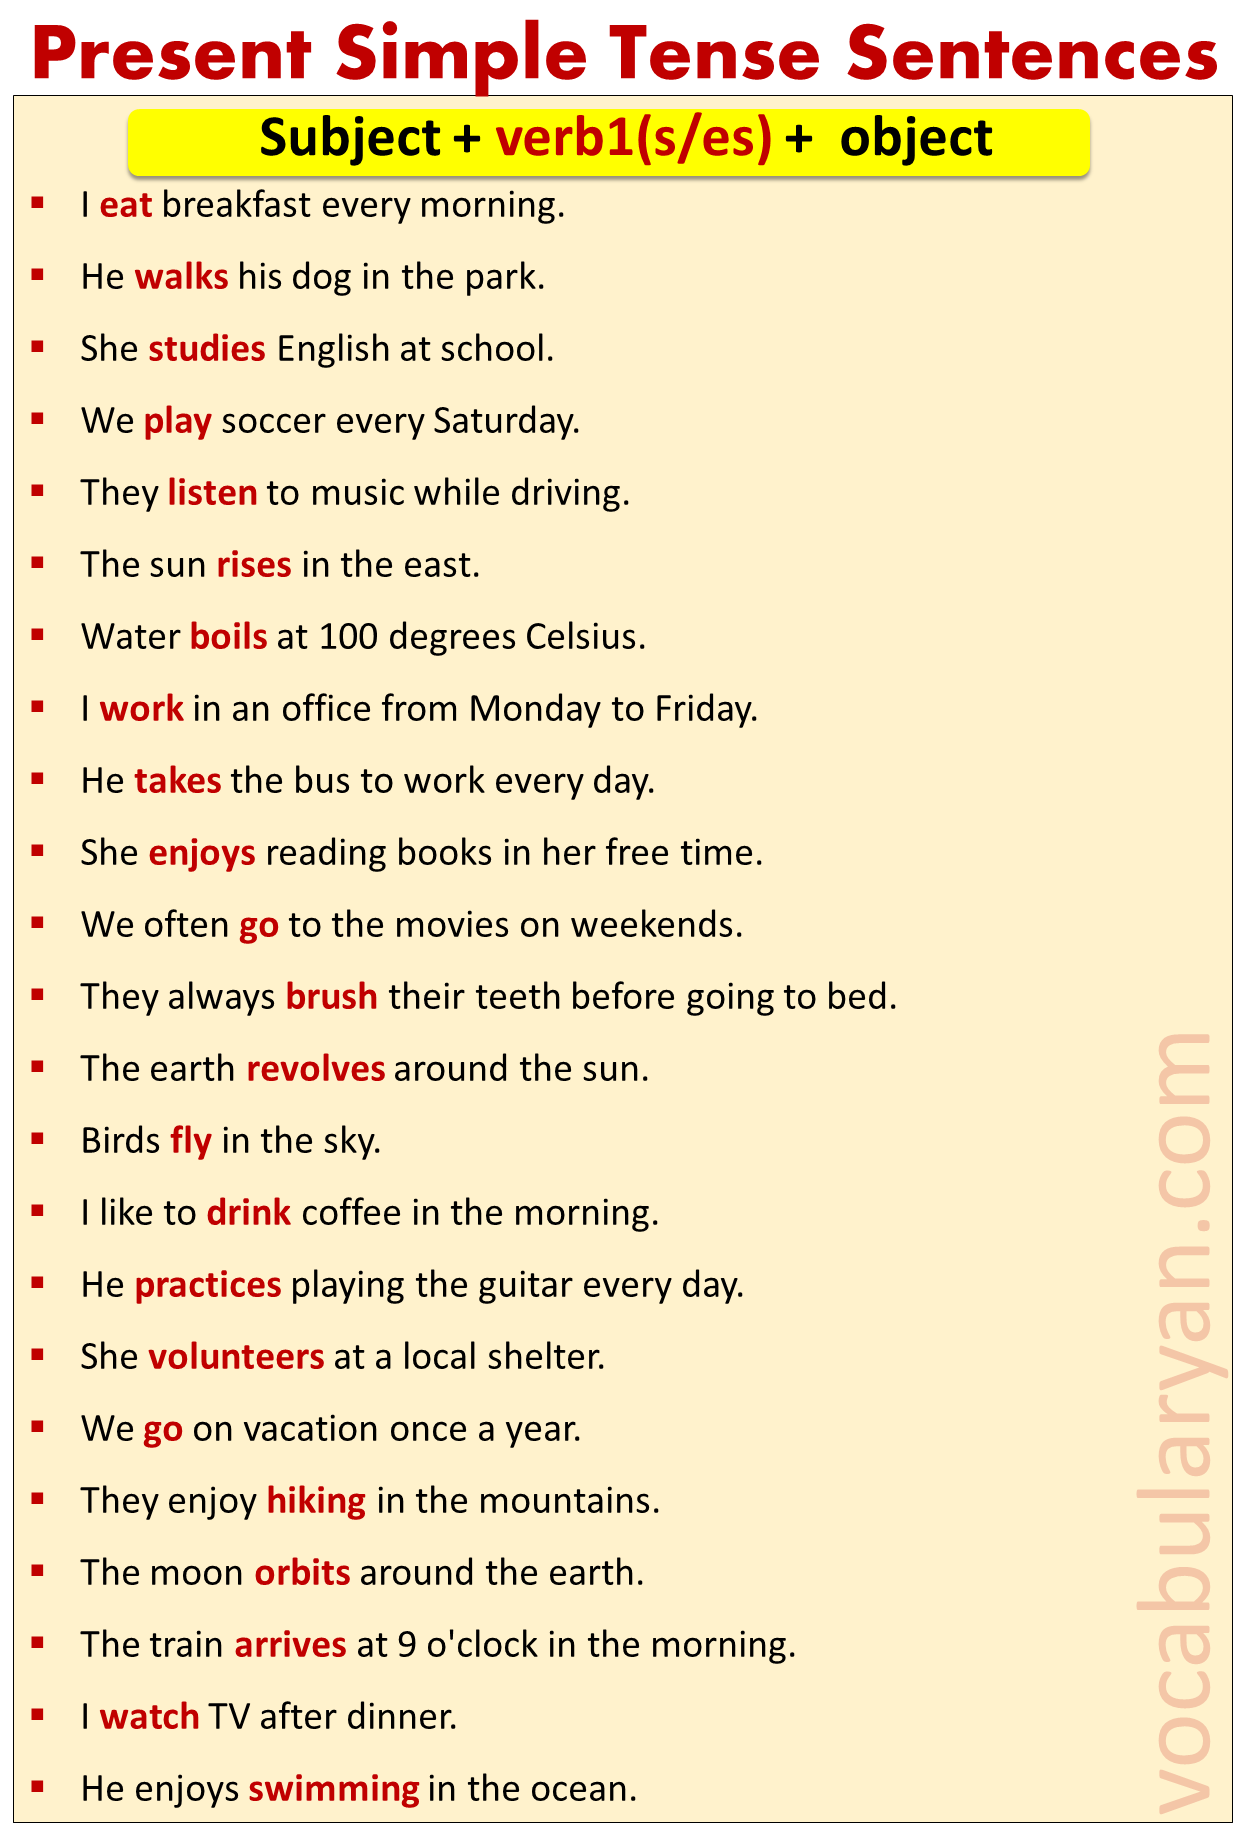 50 Sentences of Present Simple